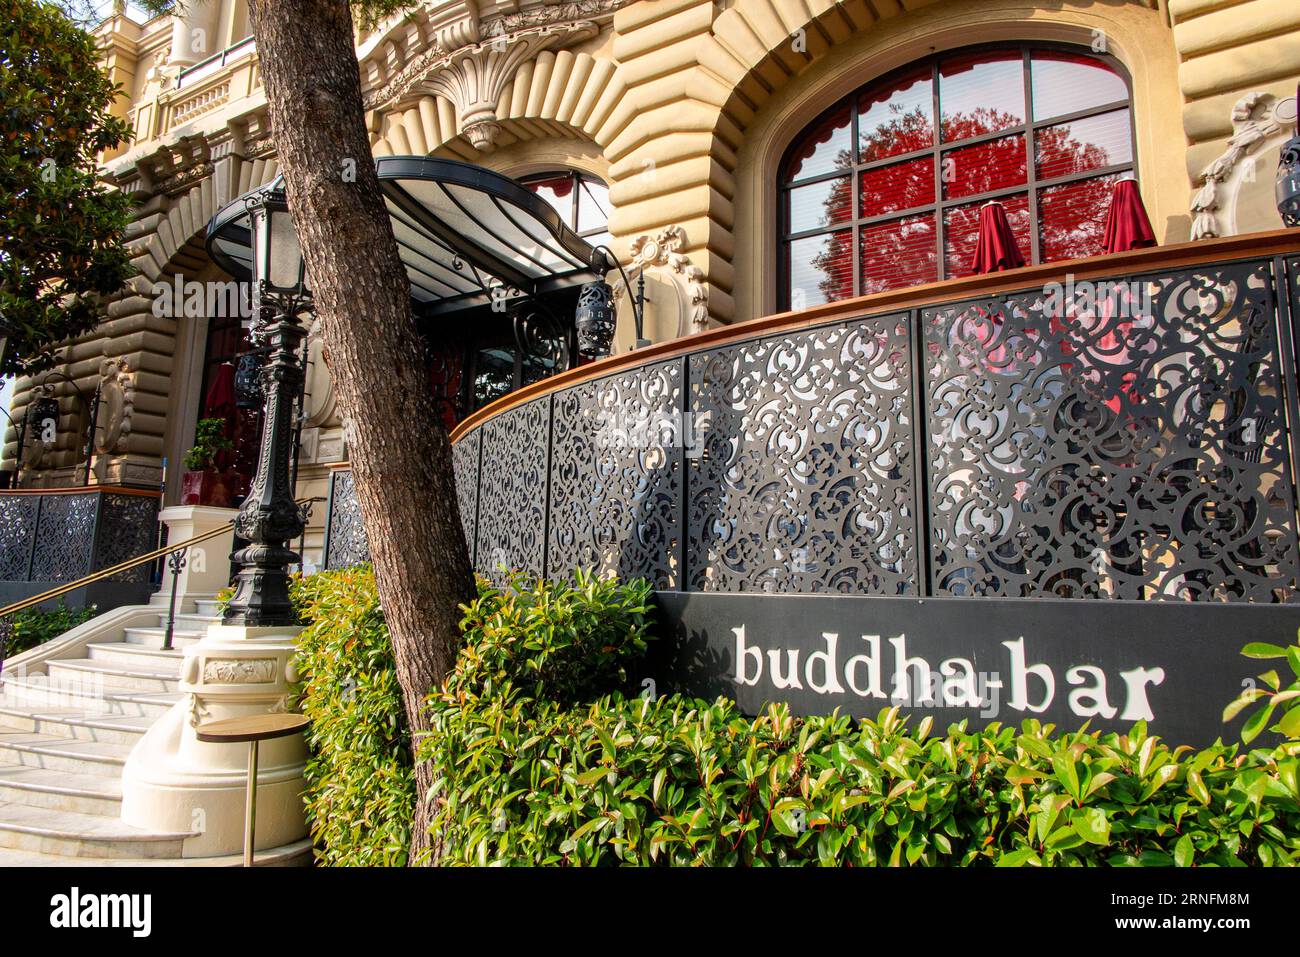 Buddha Bar club and restaurant exterior in Monaco, France Stock Photo